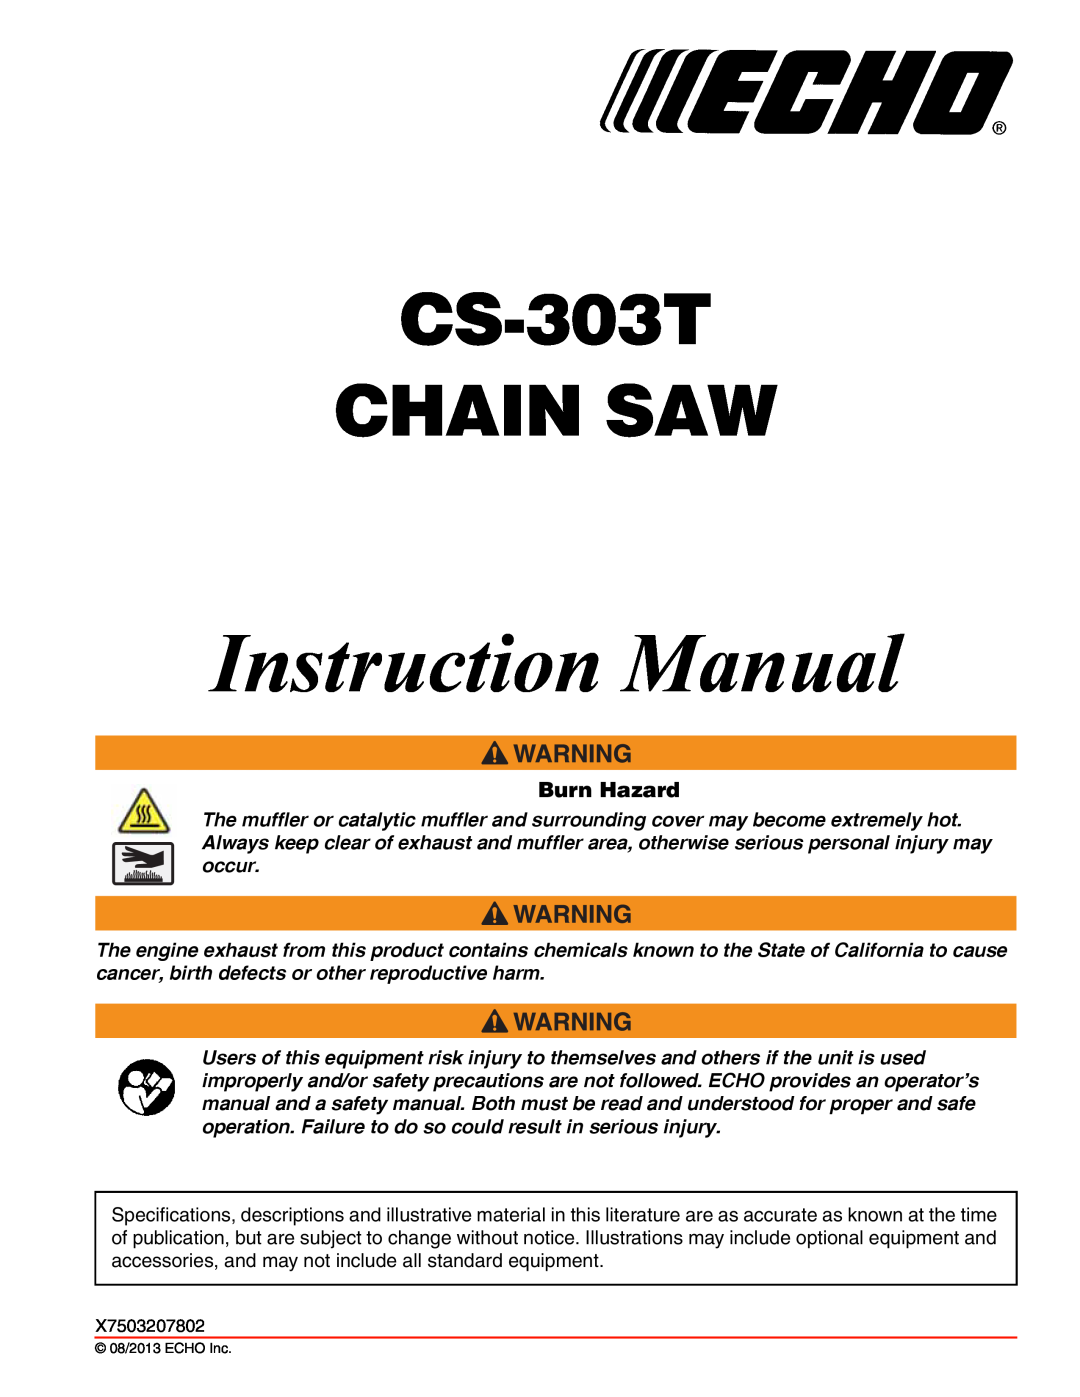 Echo instruction manual Burn Hazard, CS-303T CHAIN SAW 